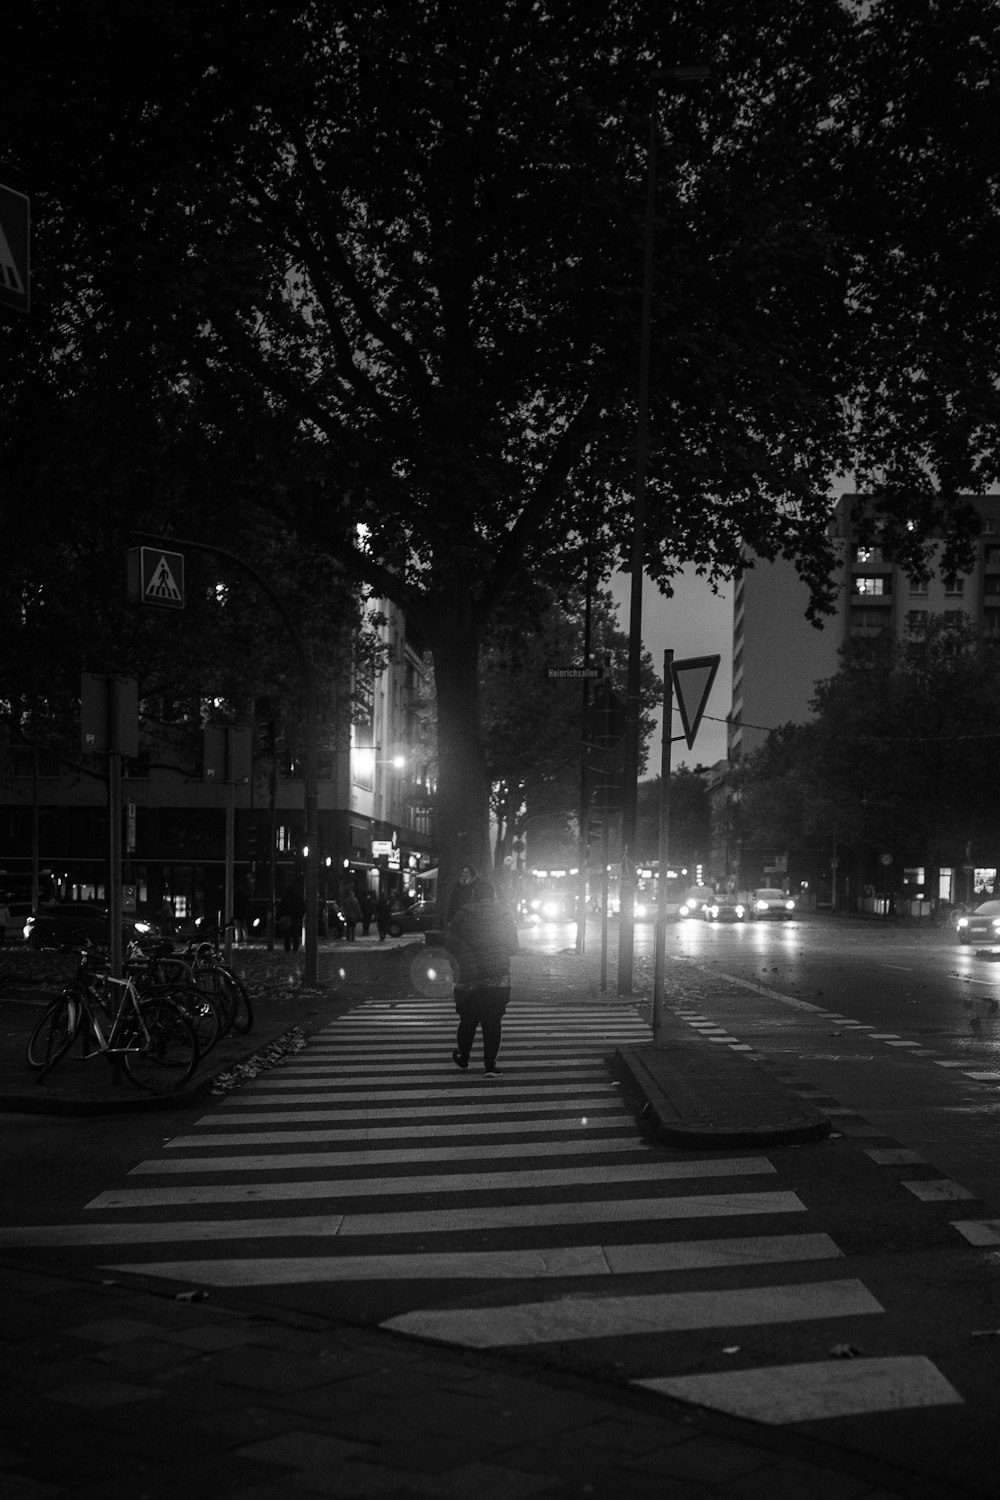 people walking on sidewalk near trees during night time